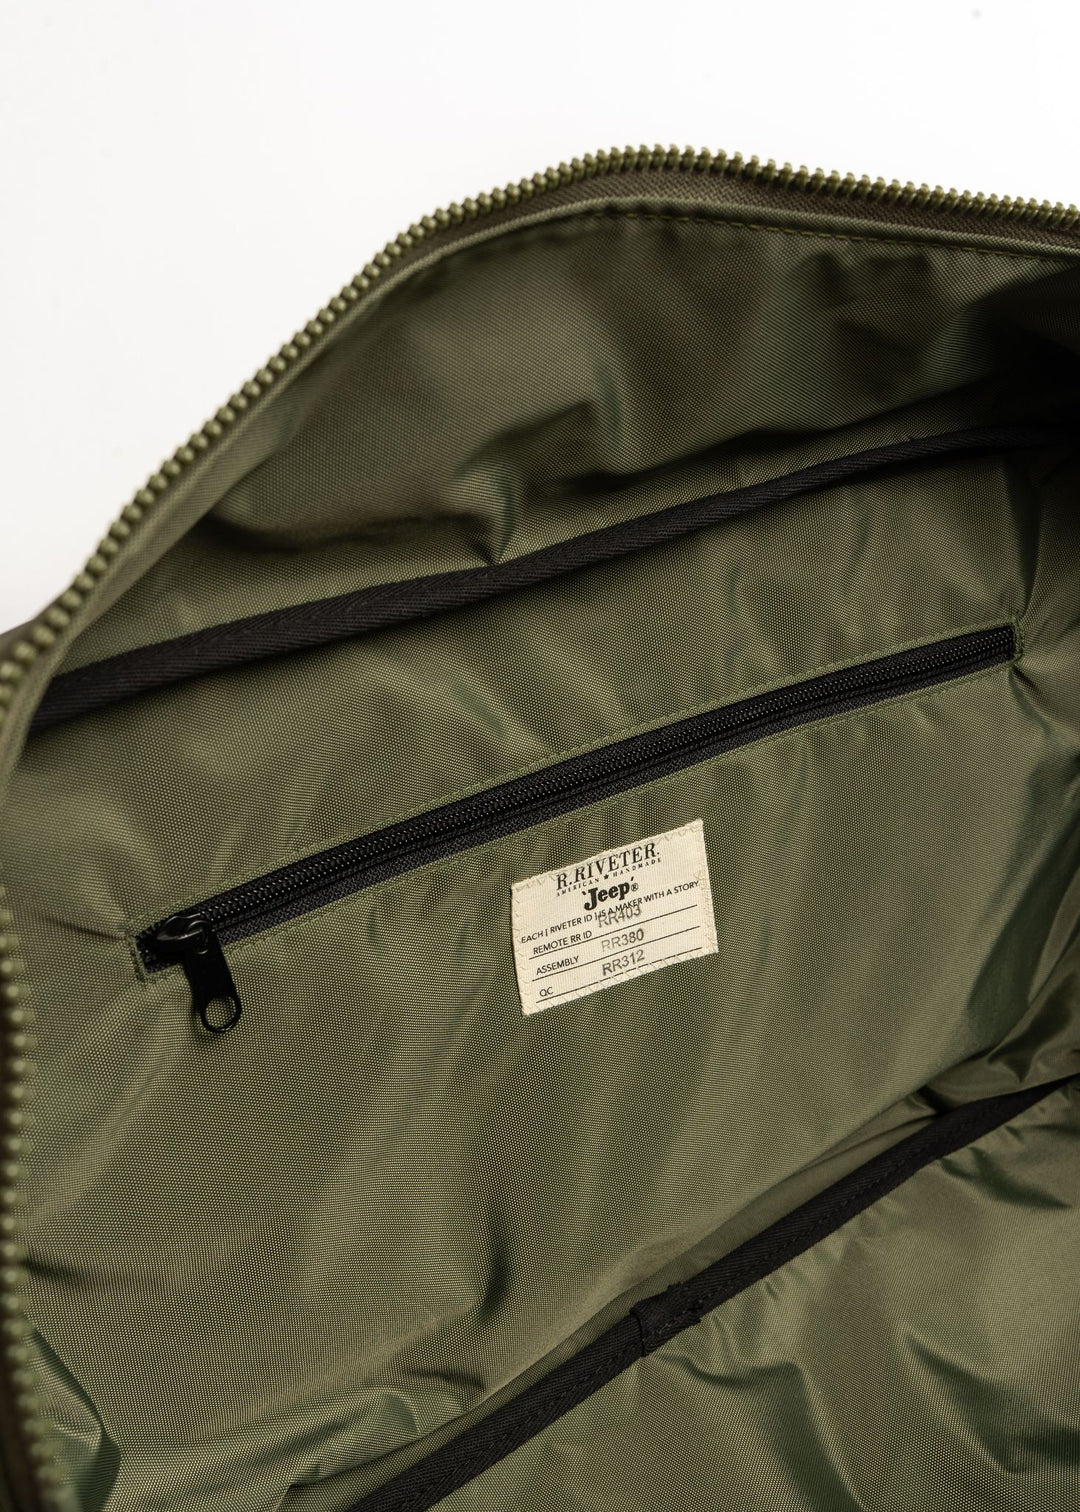 Duffle Bag | JEEP® Collaboration Fatigue Nylon + Brown Leather